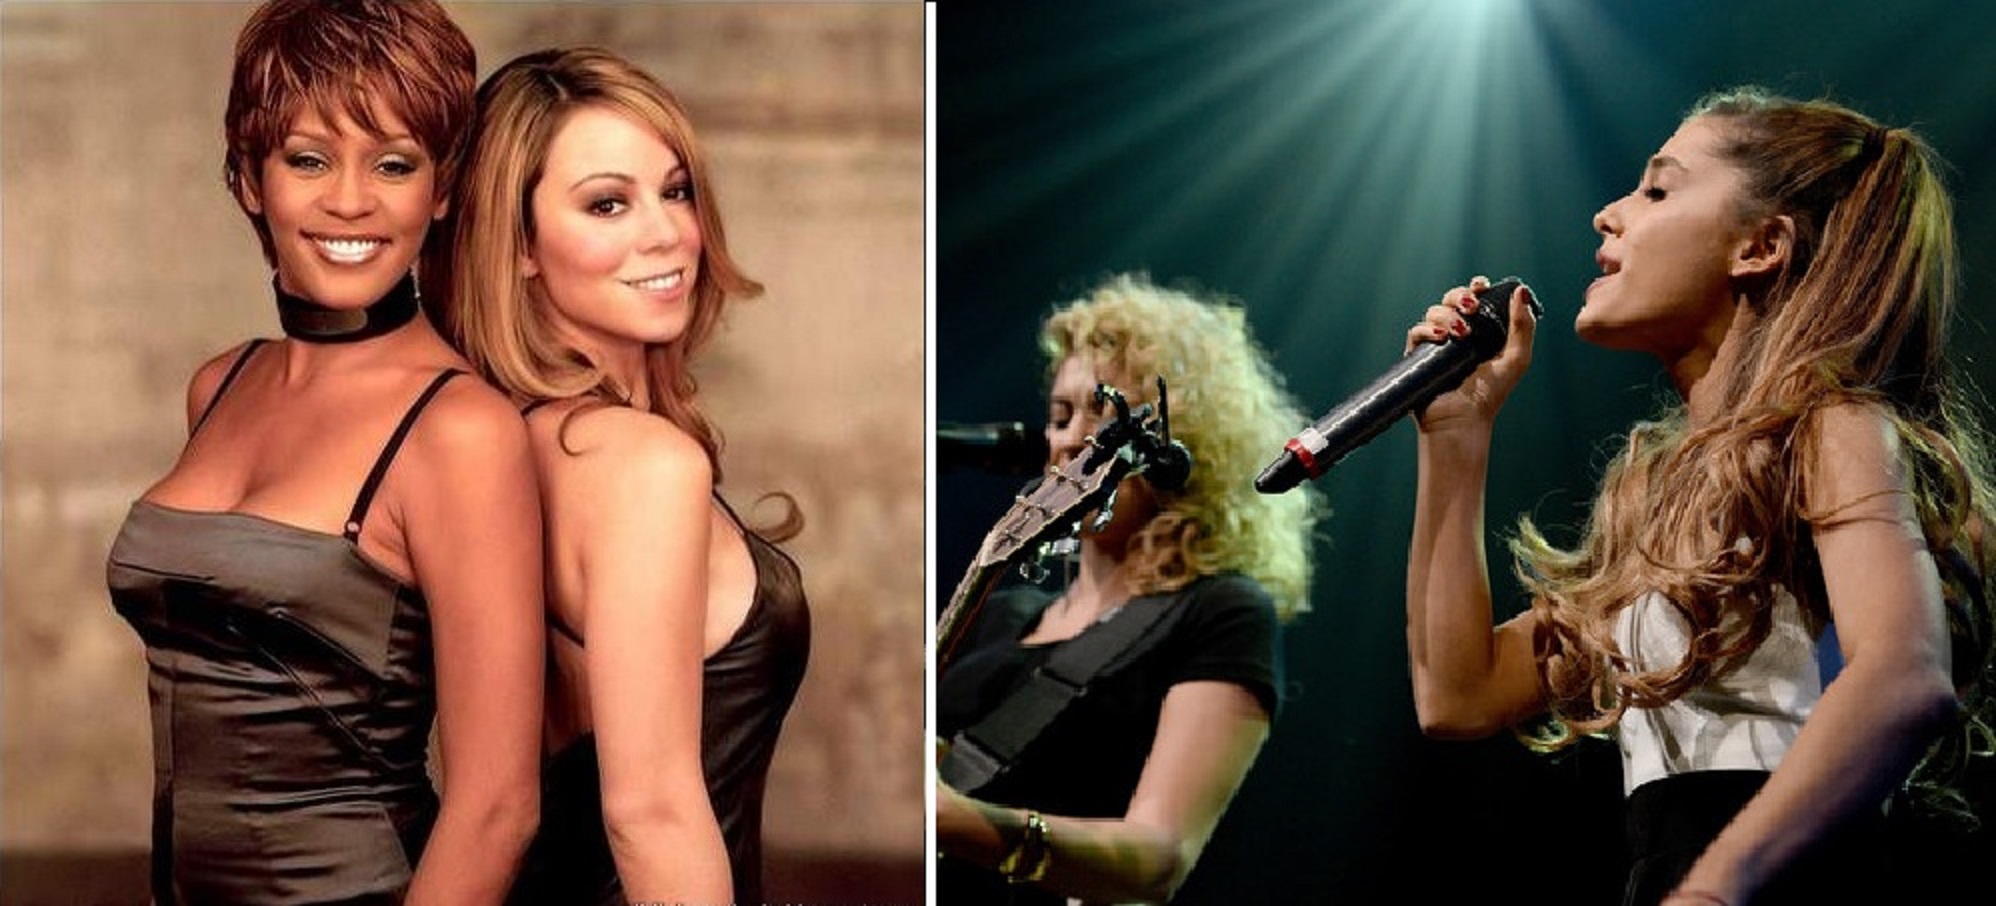 Watch: Tori Kelly & Ariana Grande Cover Whitney Houston & Mariah Carey’s ‘When You Believe’